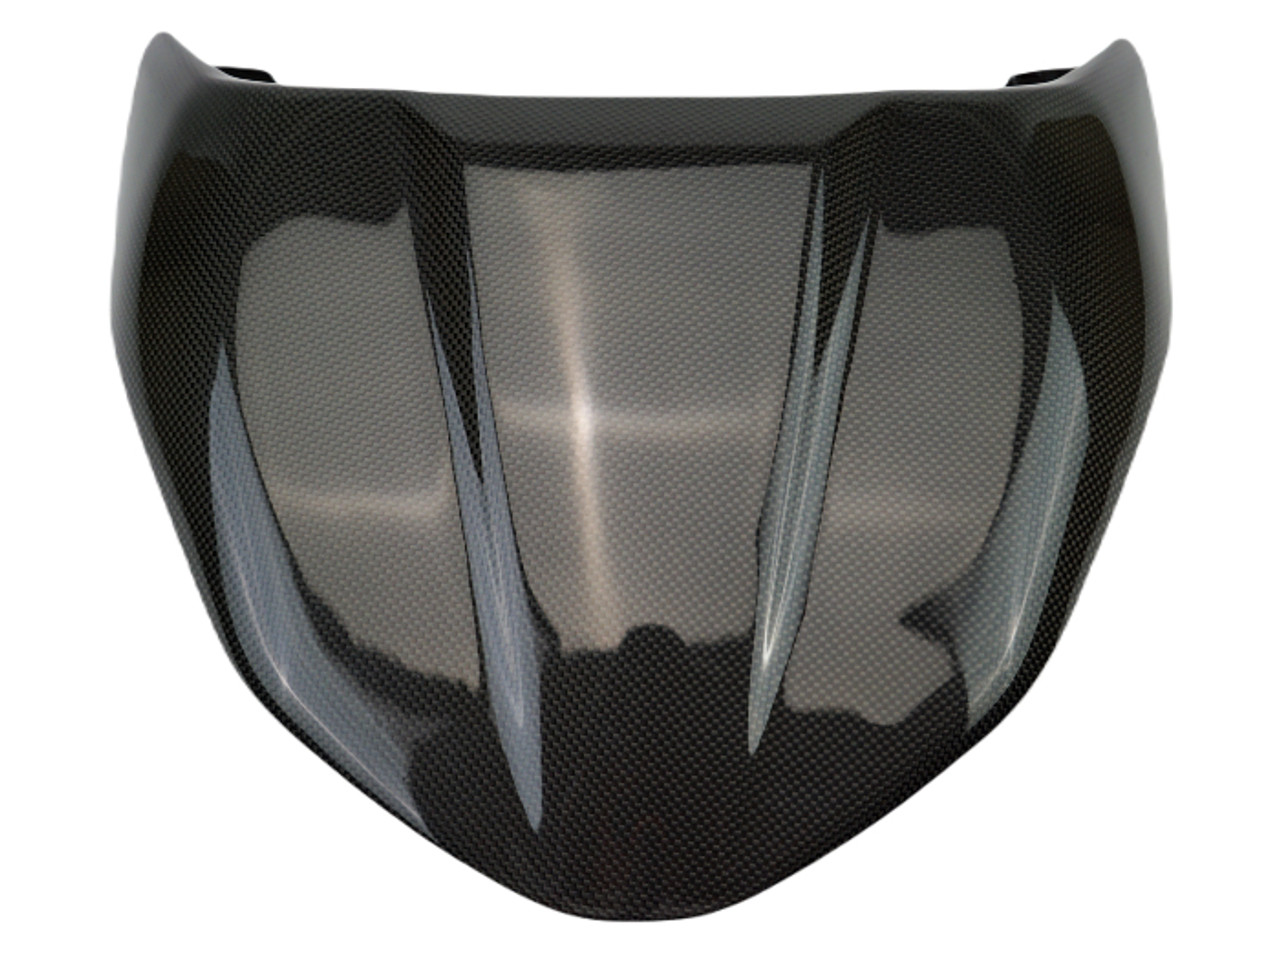 Tail Cowl in Glossy Plain Weave Carbon Fiber for Ducati Diavel V4

